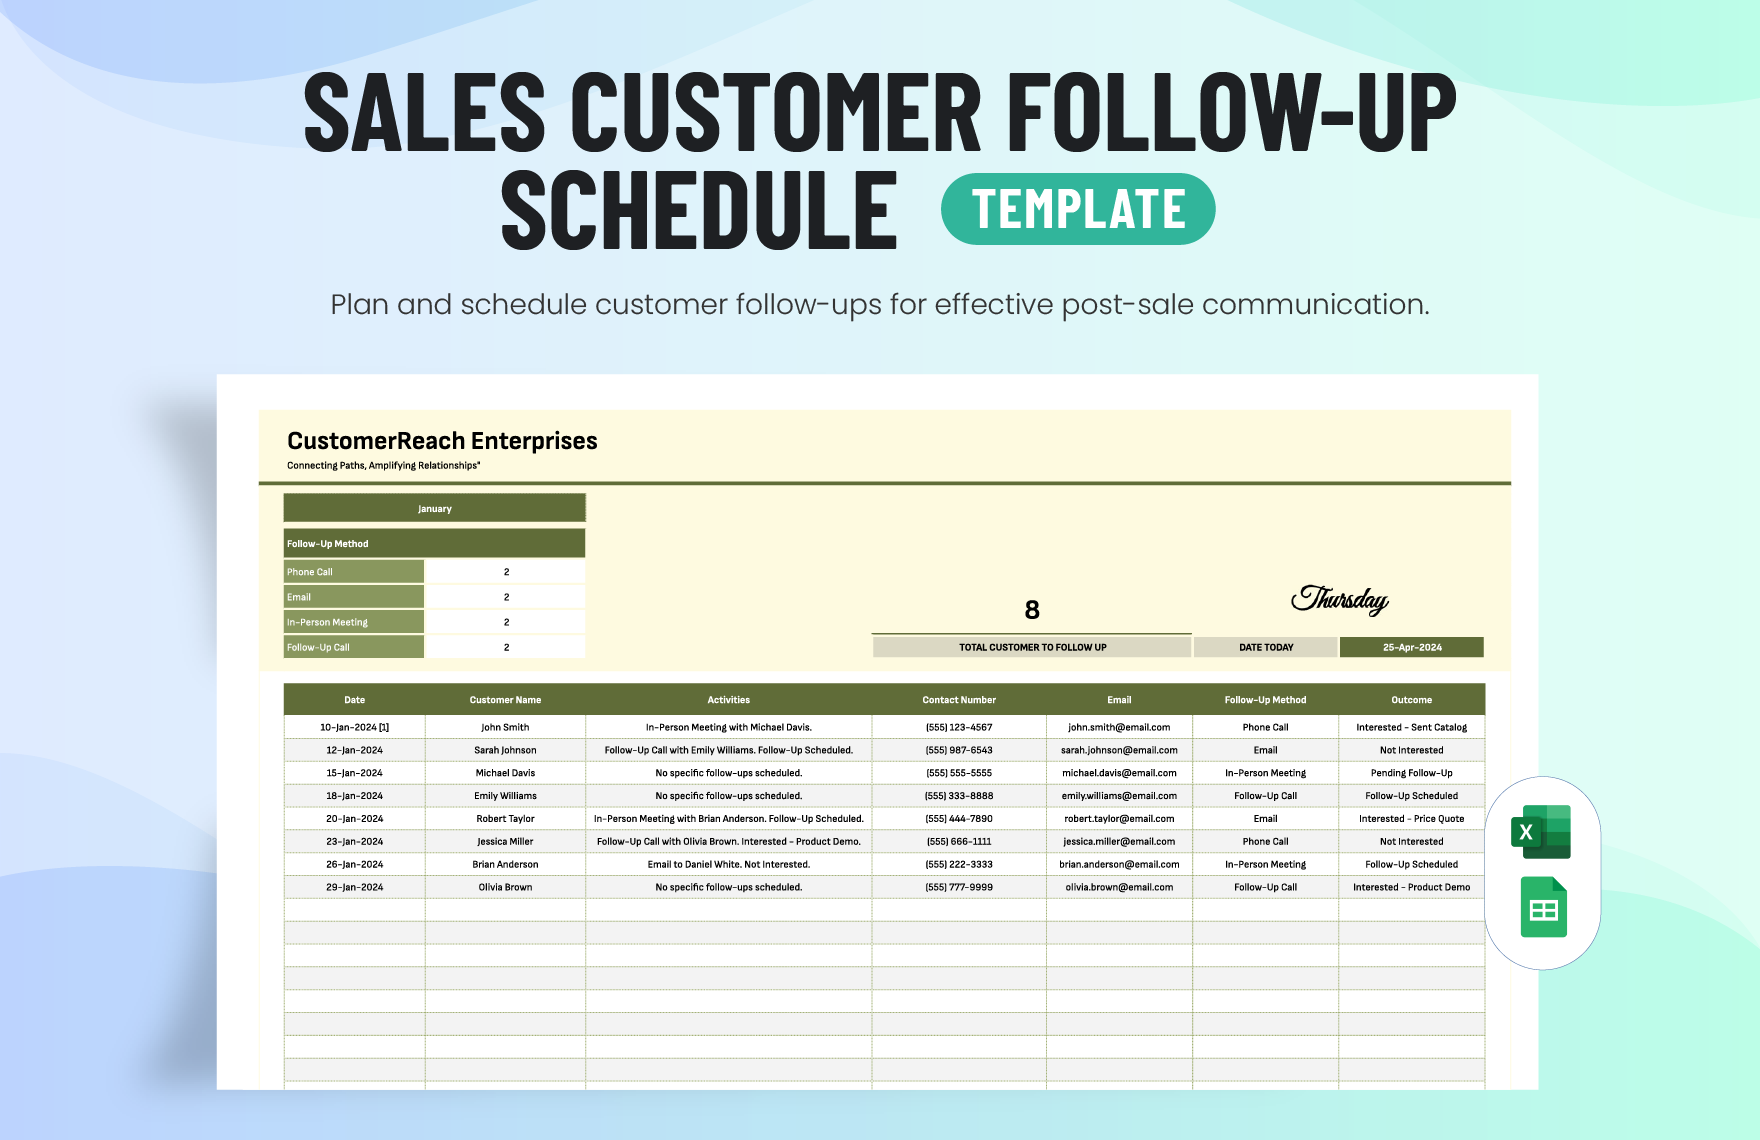 Sales Customer Follow-Up Schedule Template